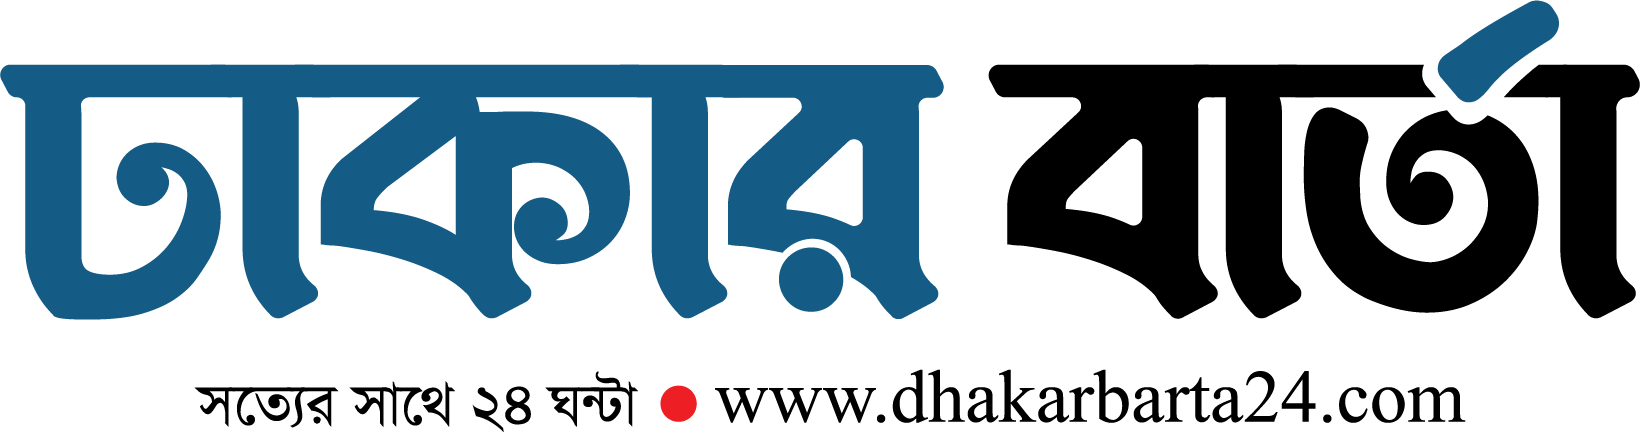 dhakarbarta24.com